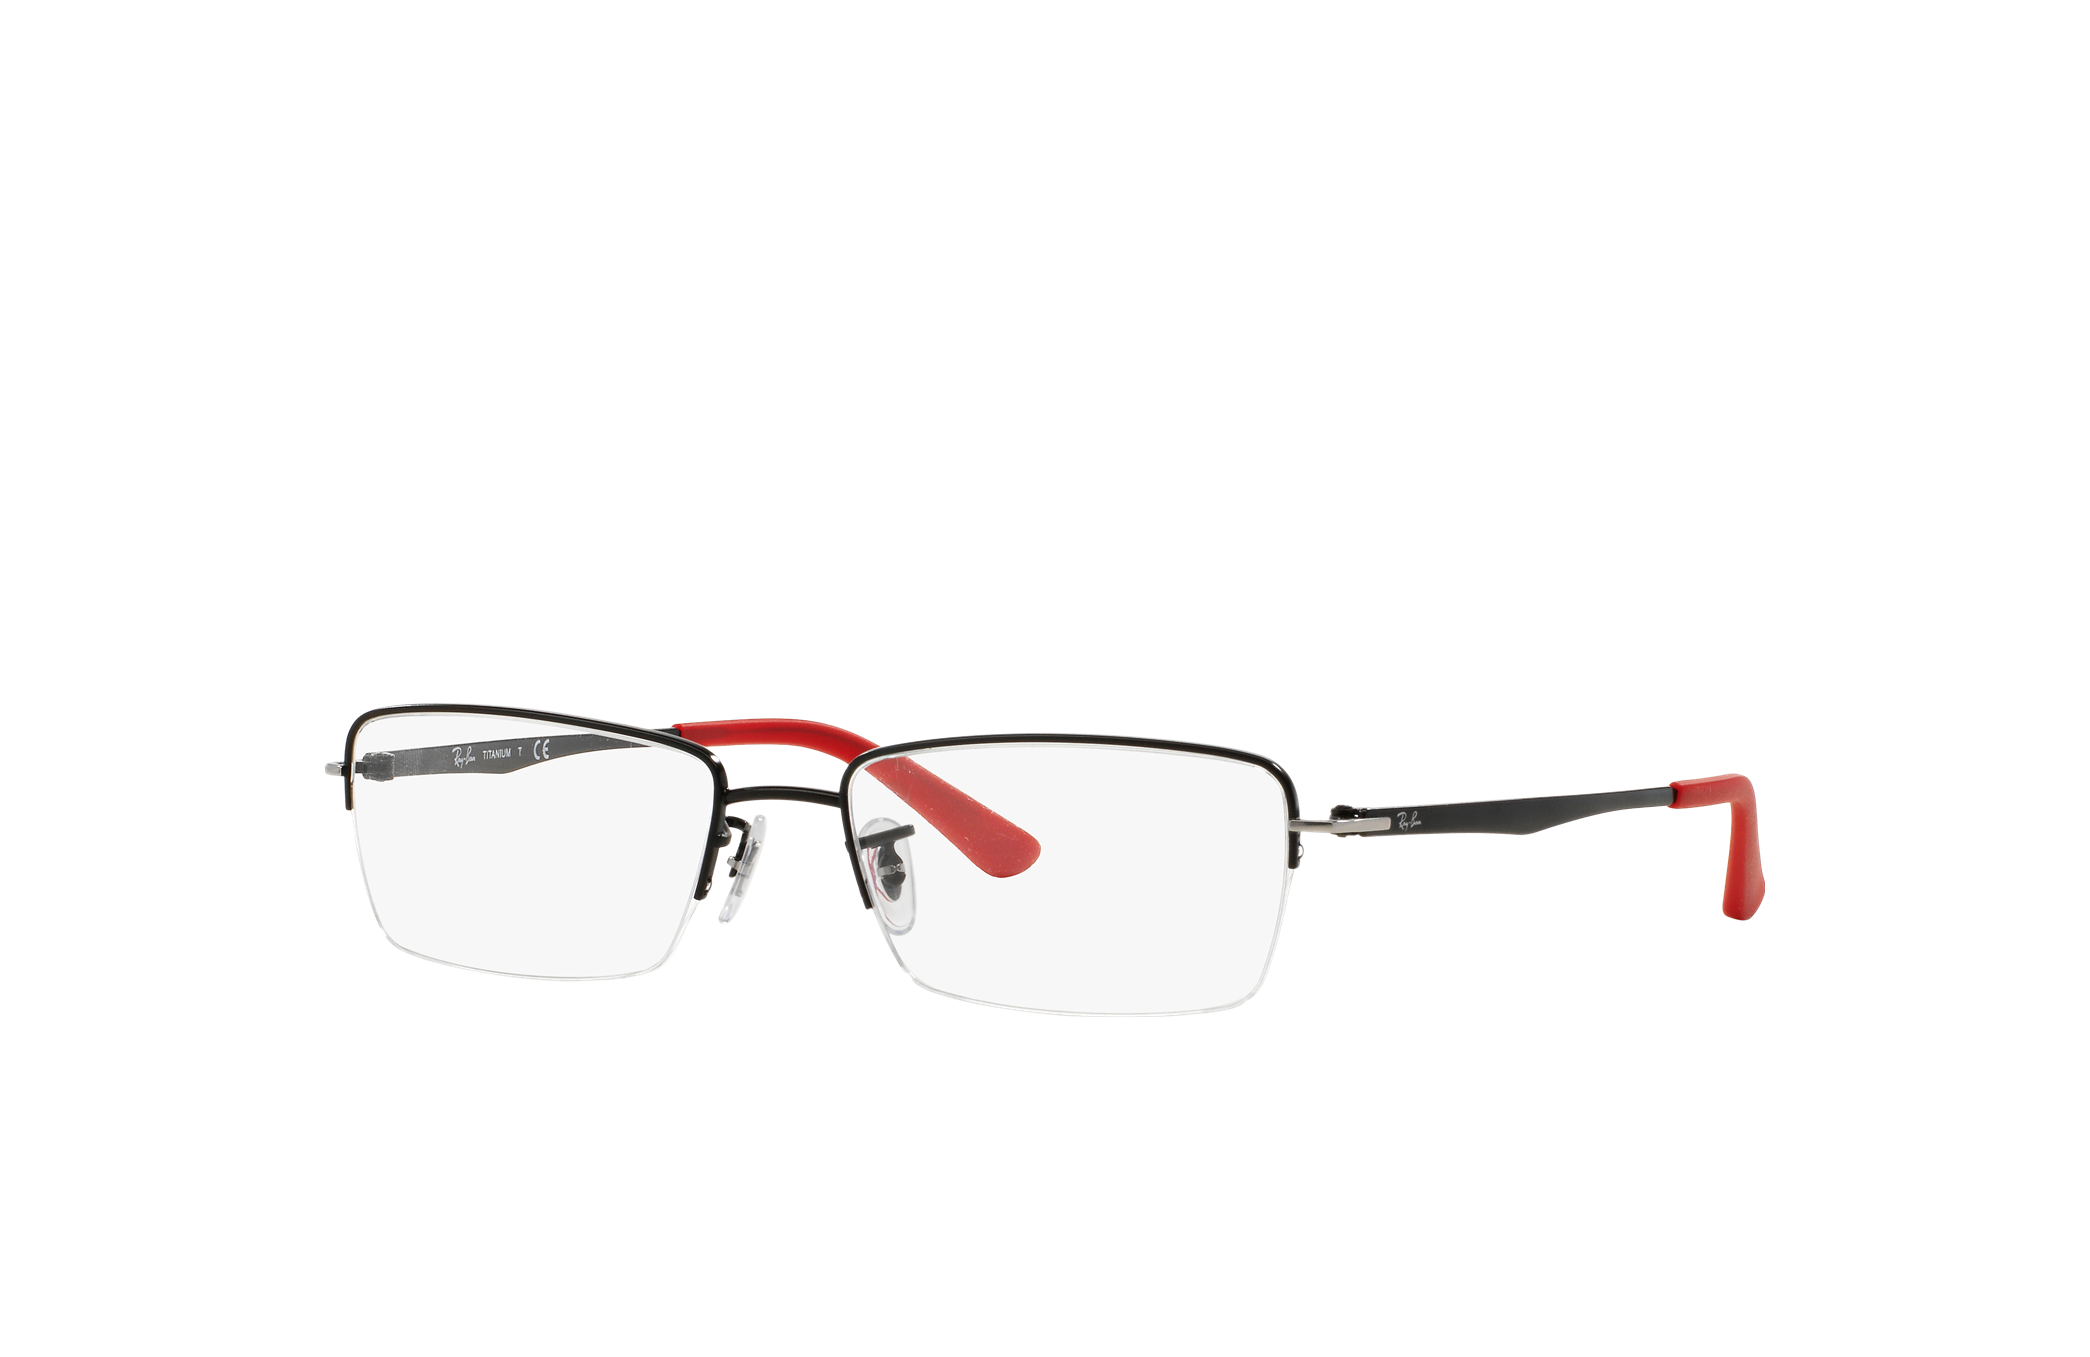 Rb8733d Eyeglasses with Black Frame - RB8733D | Ray-Ban®